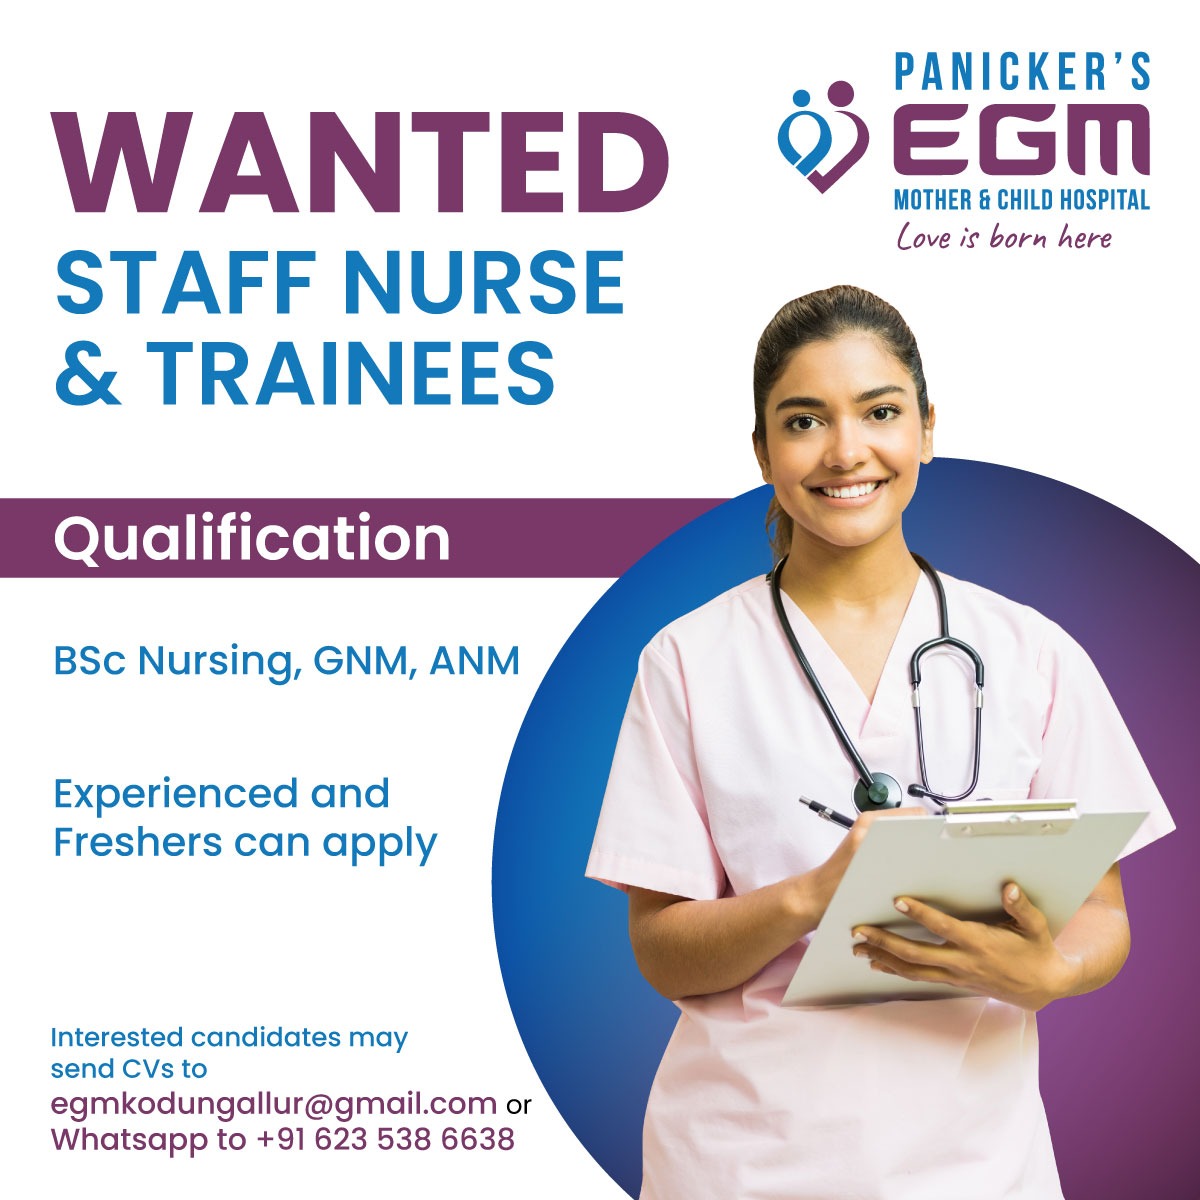 WANTED

STAFF NURSE & TRAINEES

#wanted #vacancy #staffnurse #nursingstaff #trainees #hospitajob #healthworkers